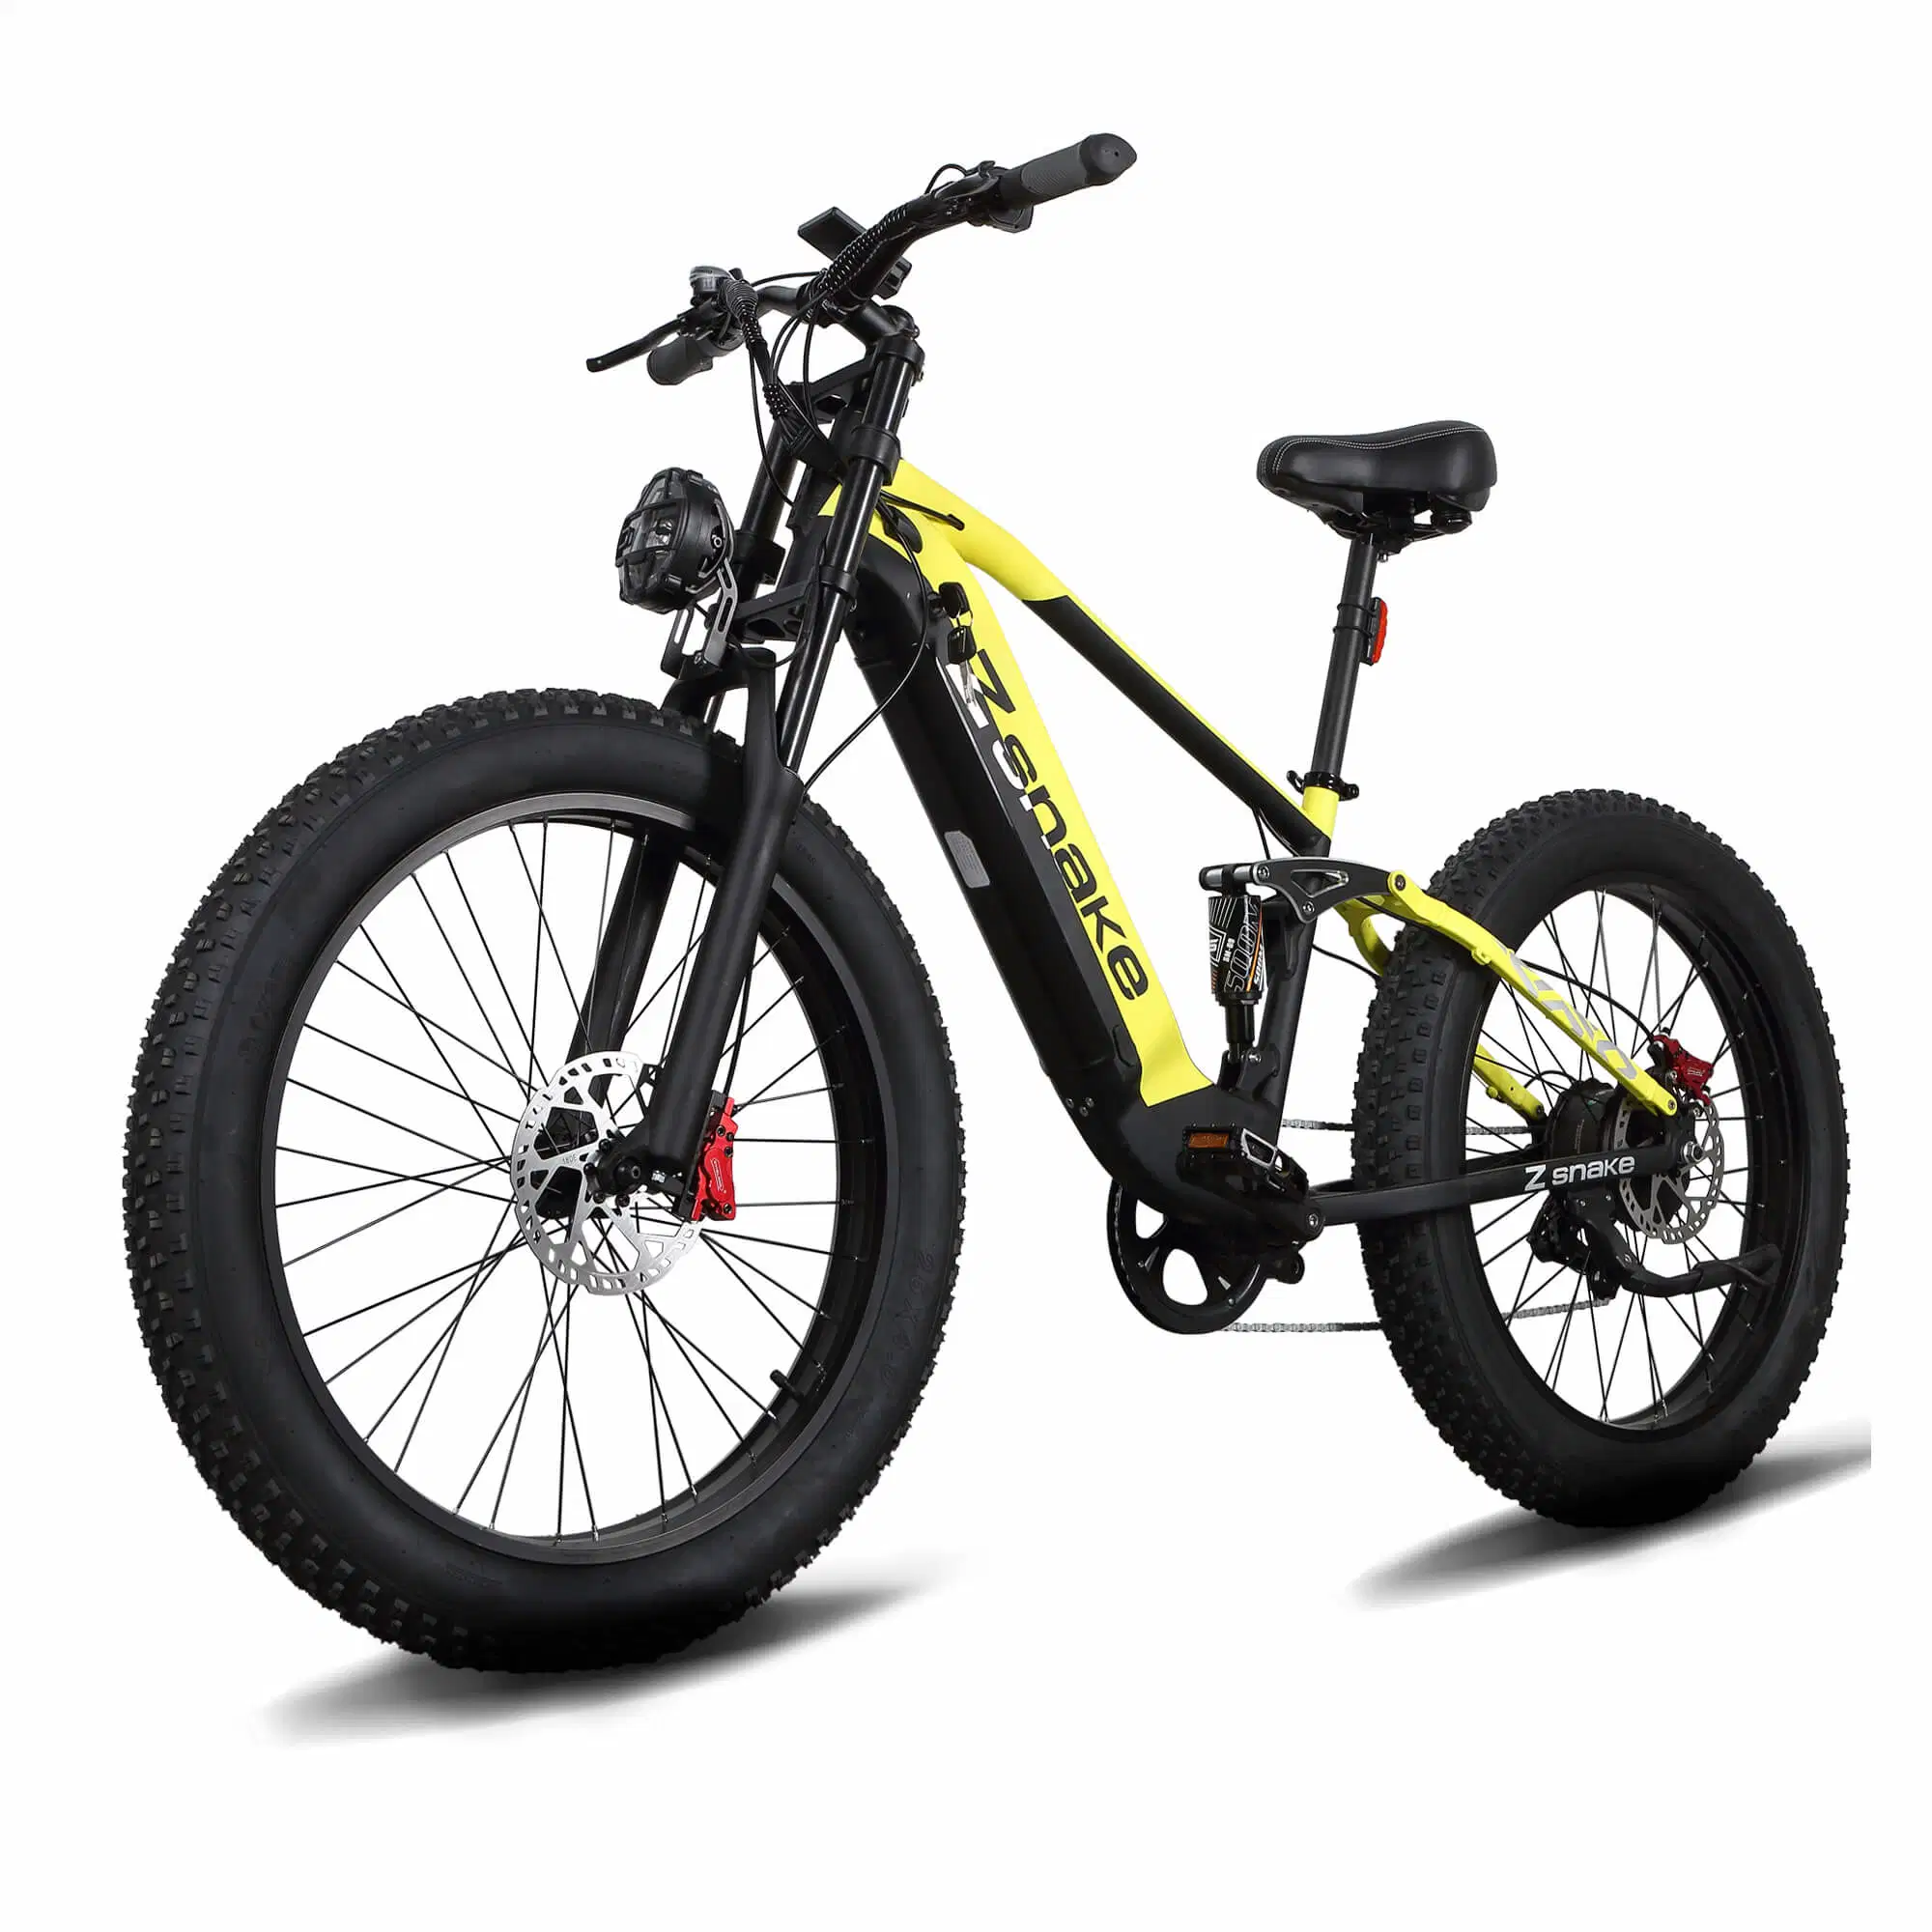 Zsnake 750W bicicleta eléctrica rápida para adultos 30 mph 48V 20A celda de litio 26 pulgadas Fat Road neumáticos de vacío y. Pantalla LED